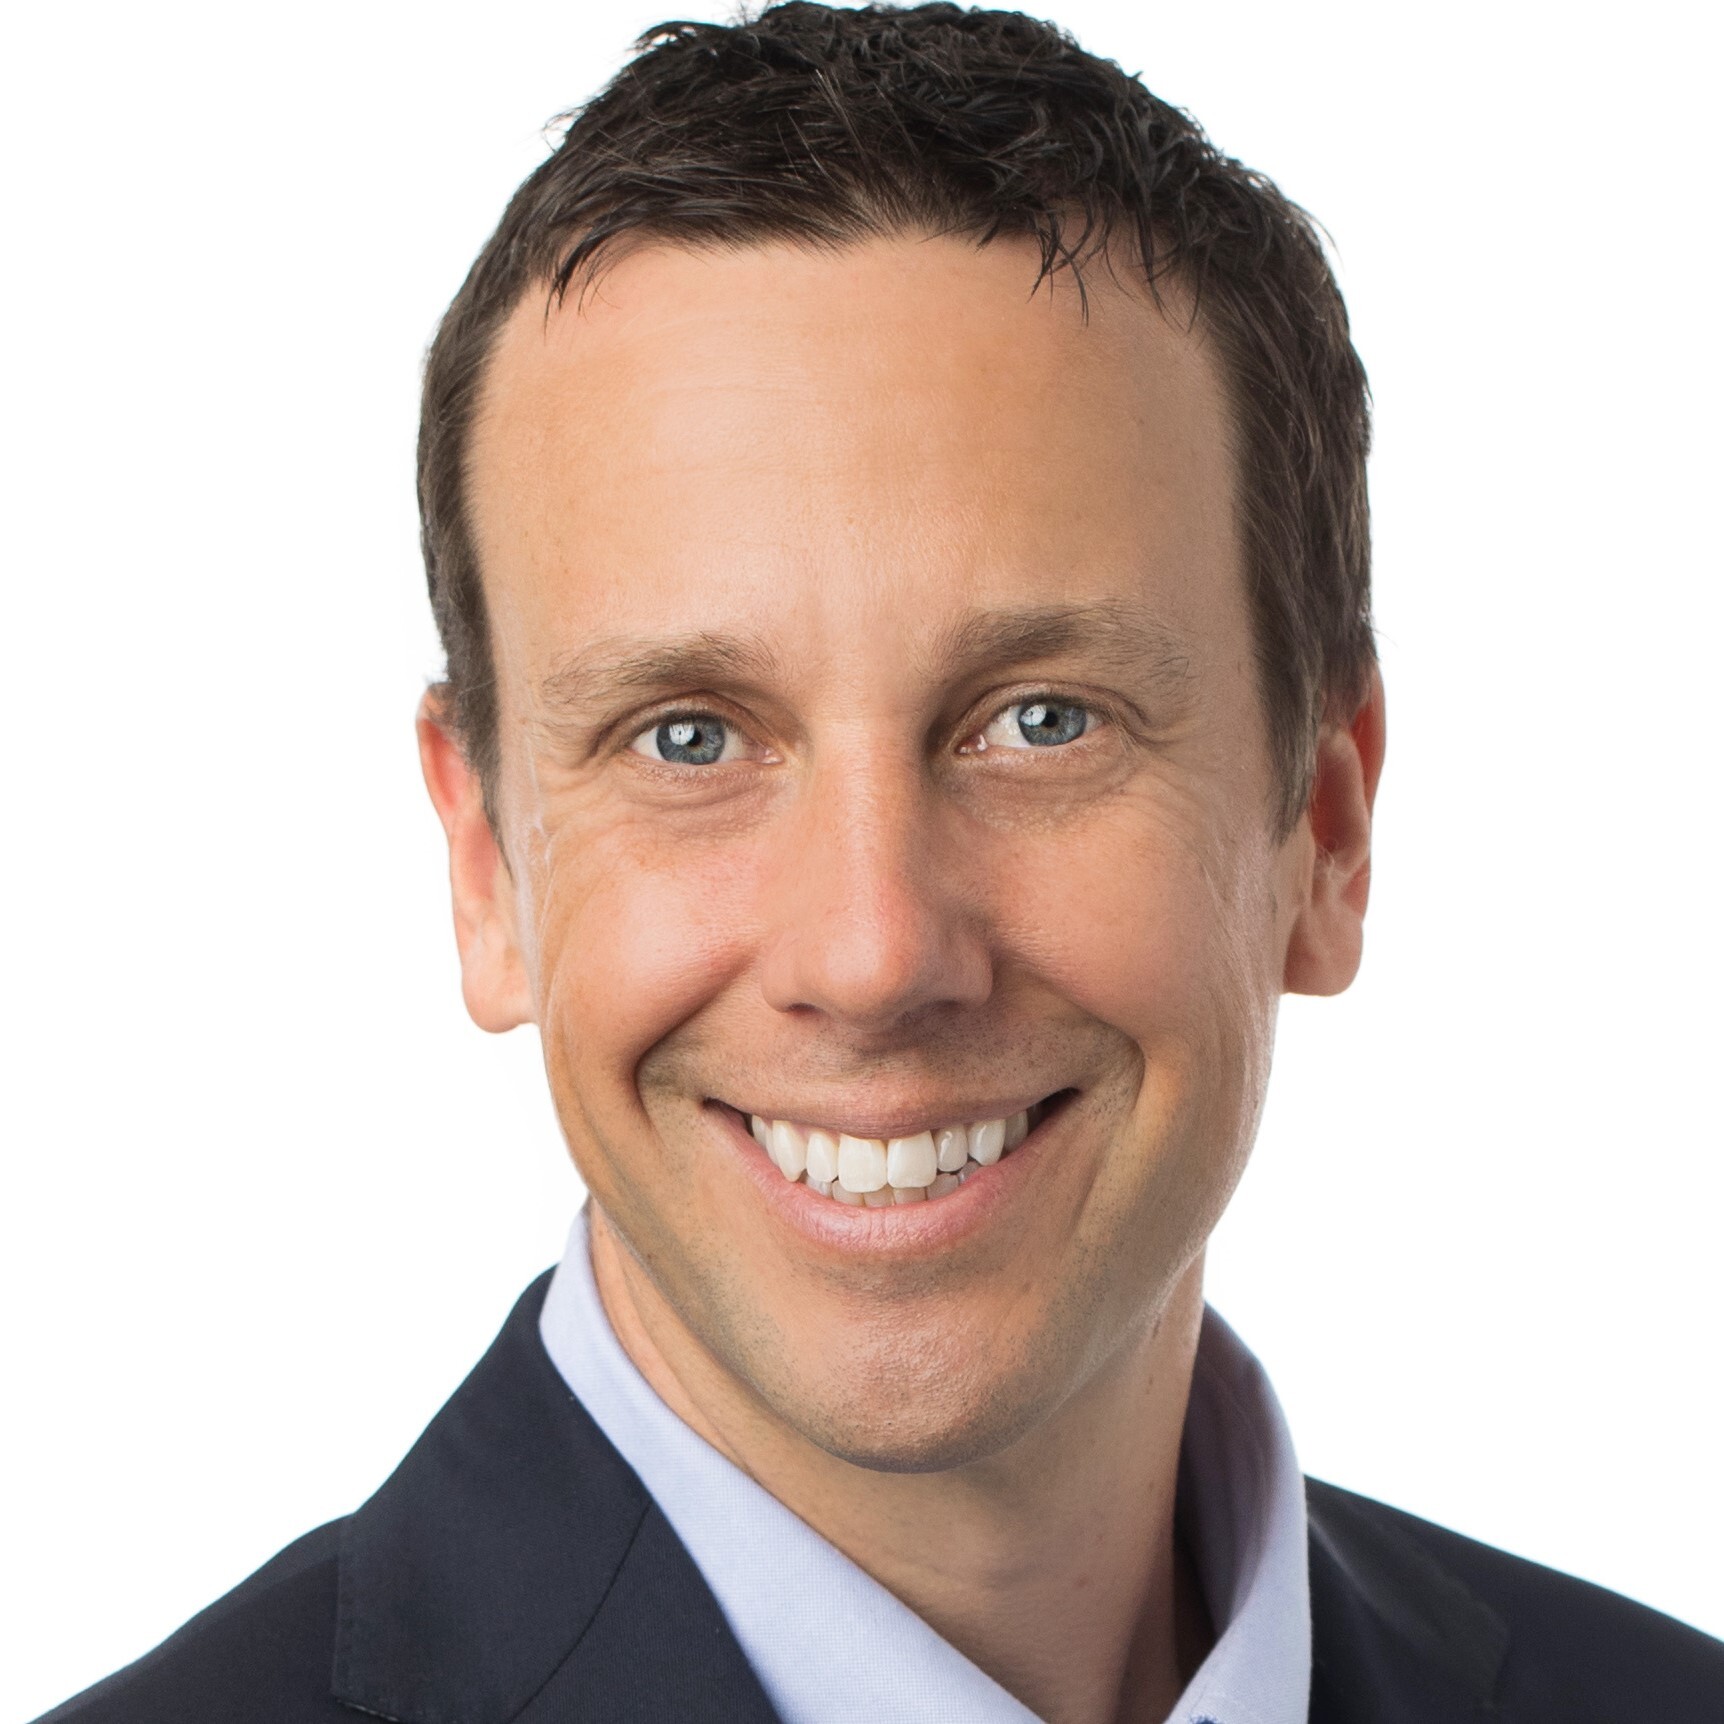 10. Matt Giunipero, global head of data, analytics, and insights, Foot Locker, Inc.